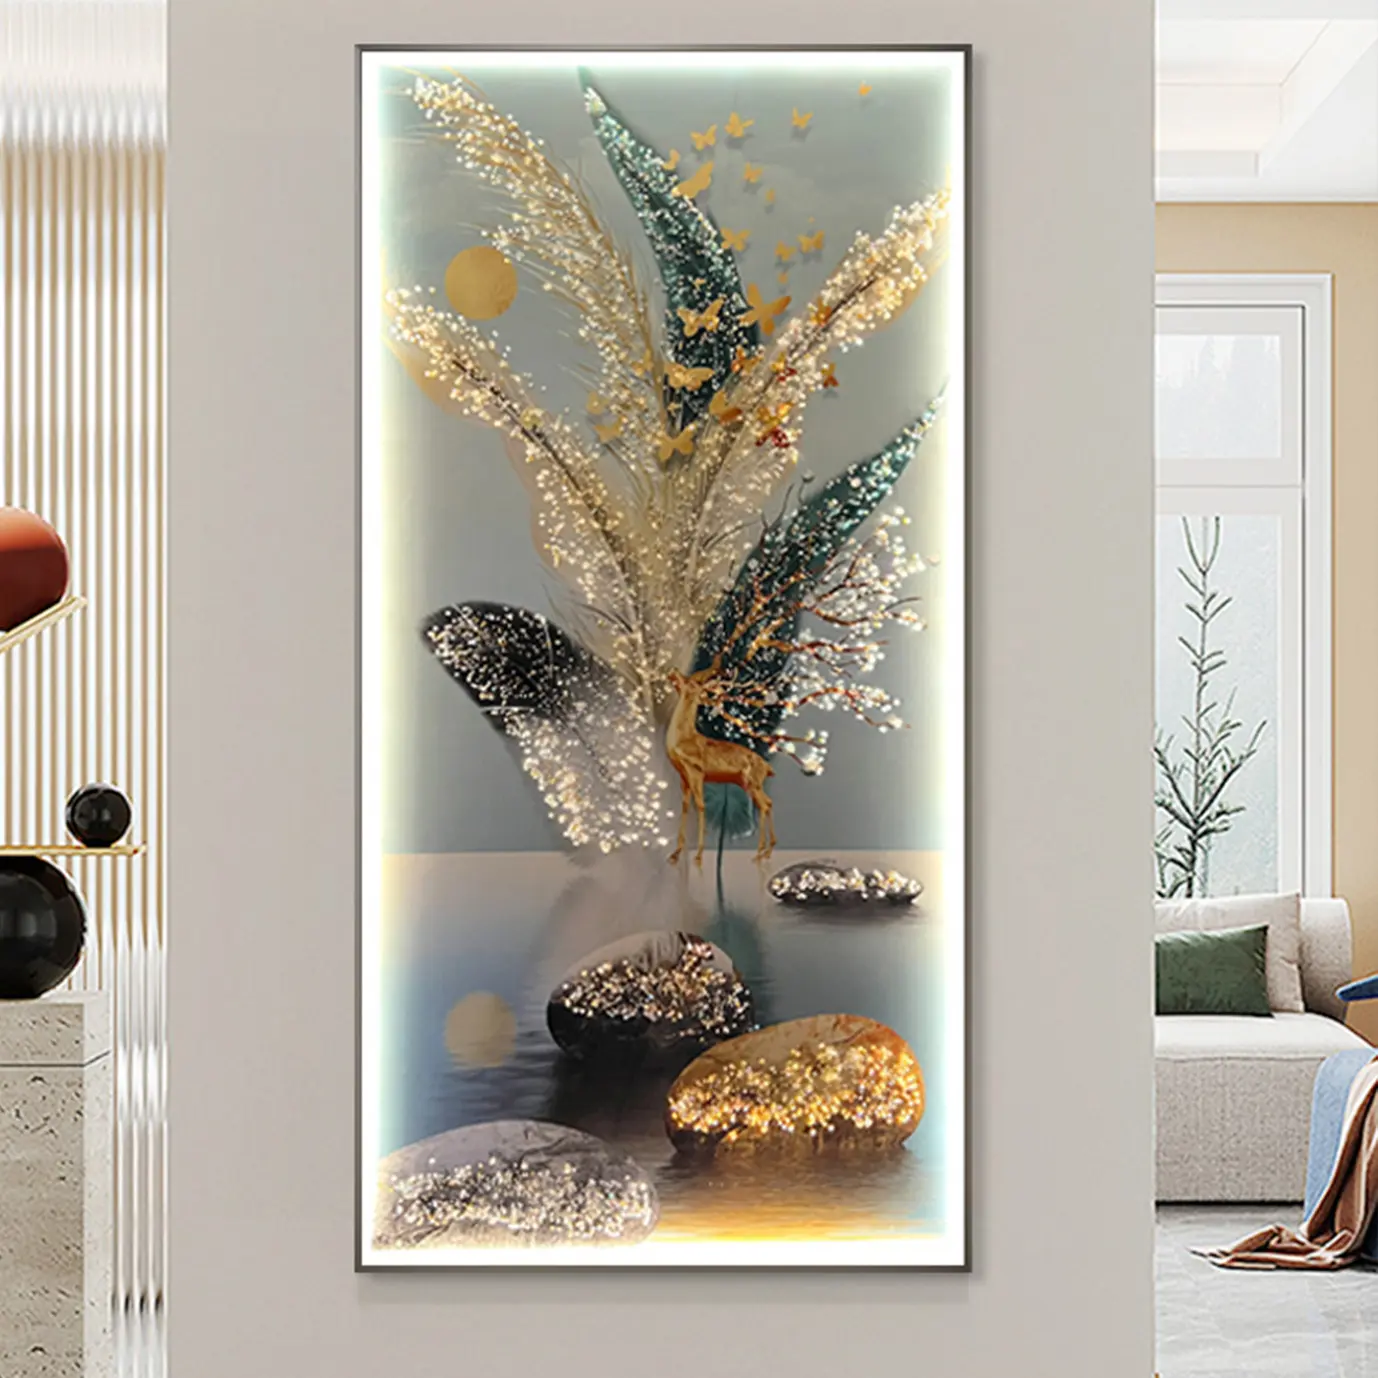 Moderno lujo cristal porcelana decoración pintura Control remoto iluminación LED pared arte colgante imagen